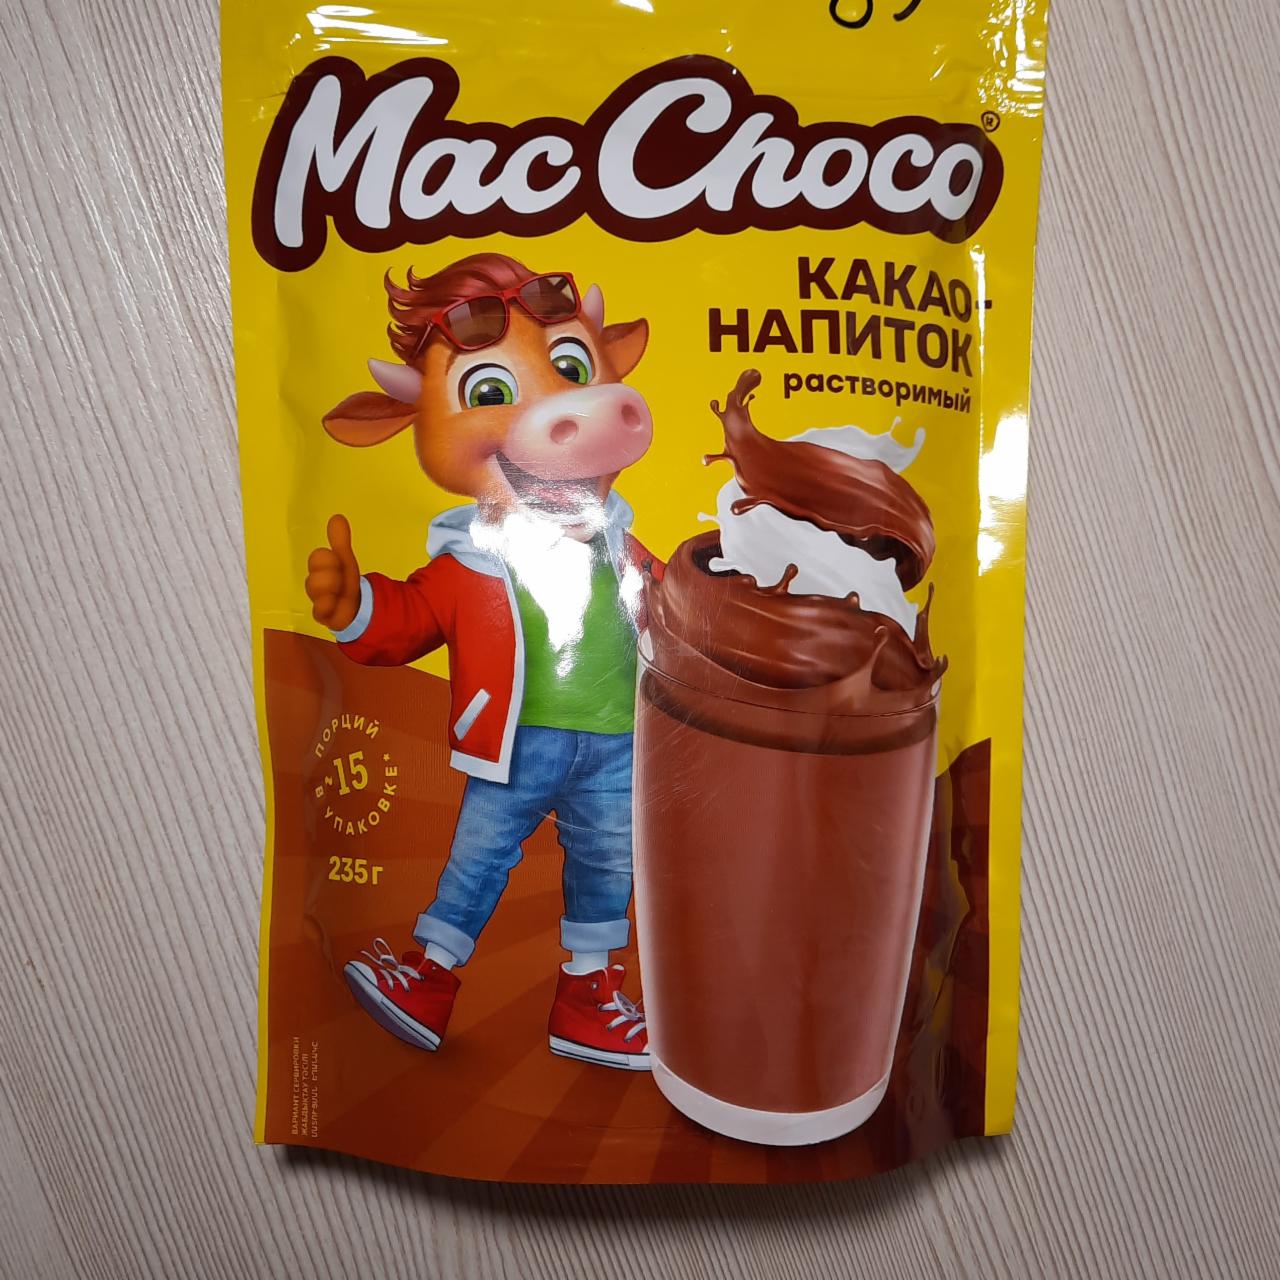 Фото - какао напиток MacChoco